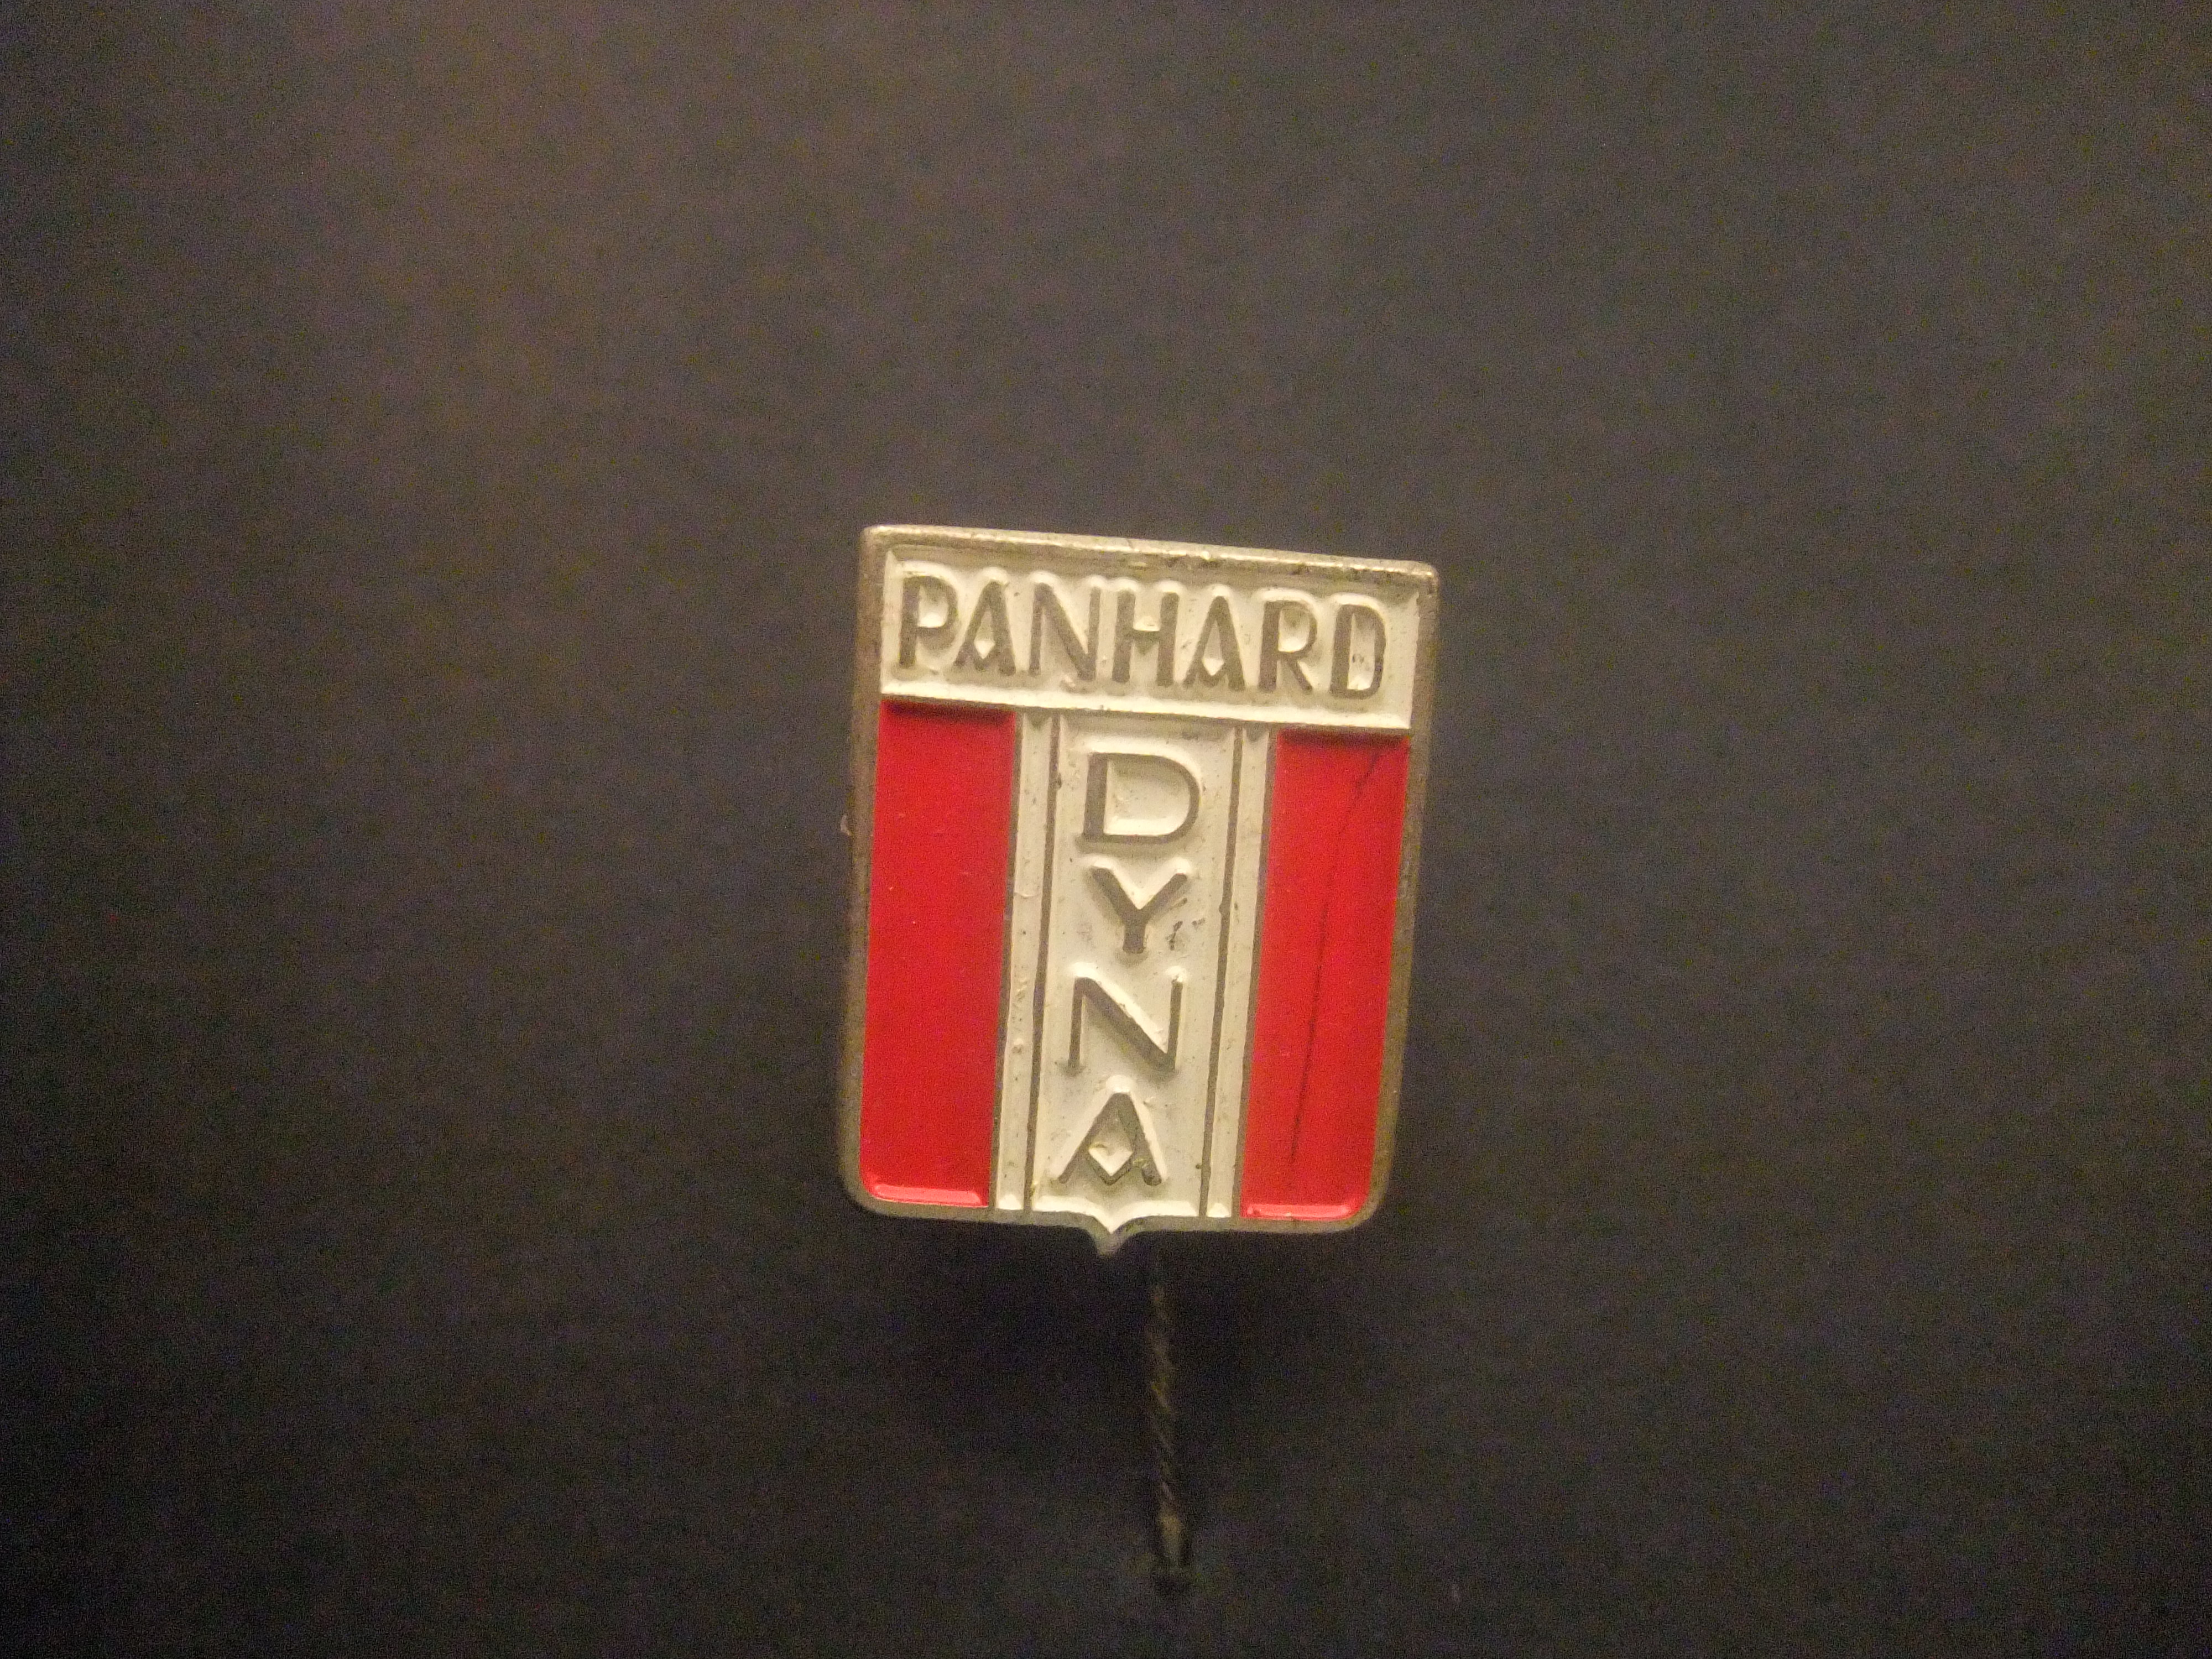 Panhard Dyna werelds oudste autofabrikant, logo